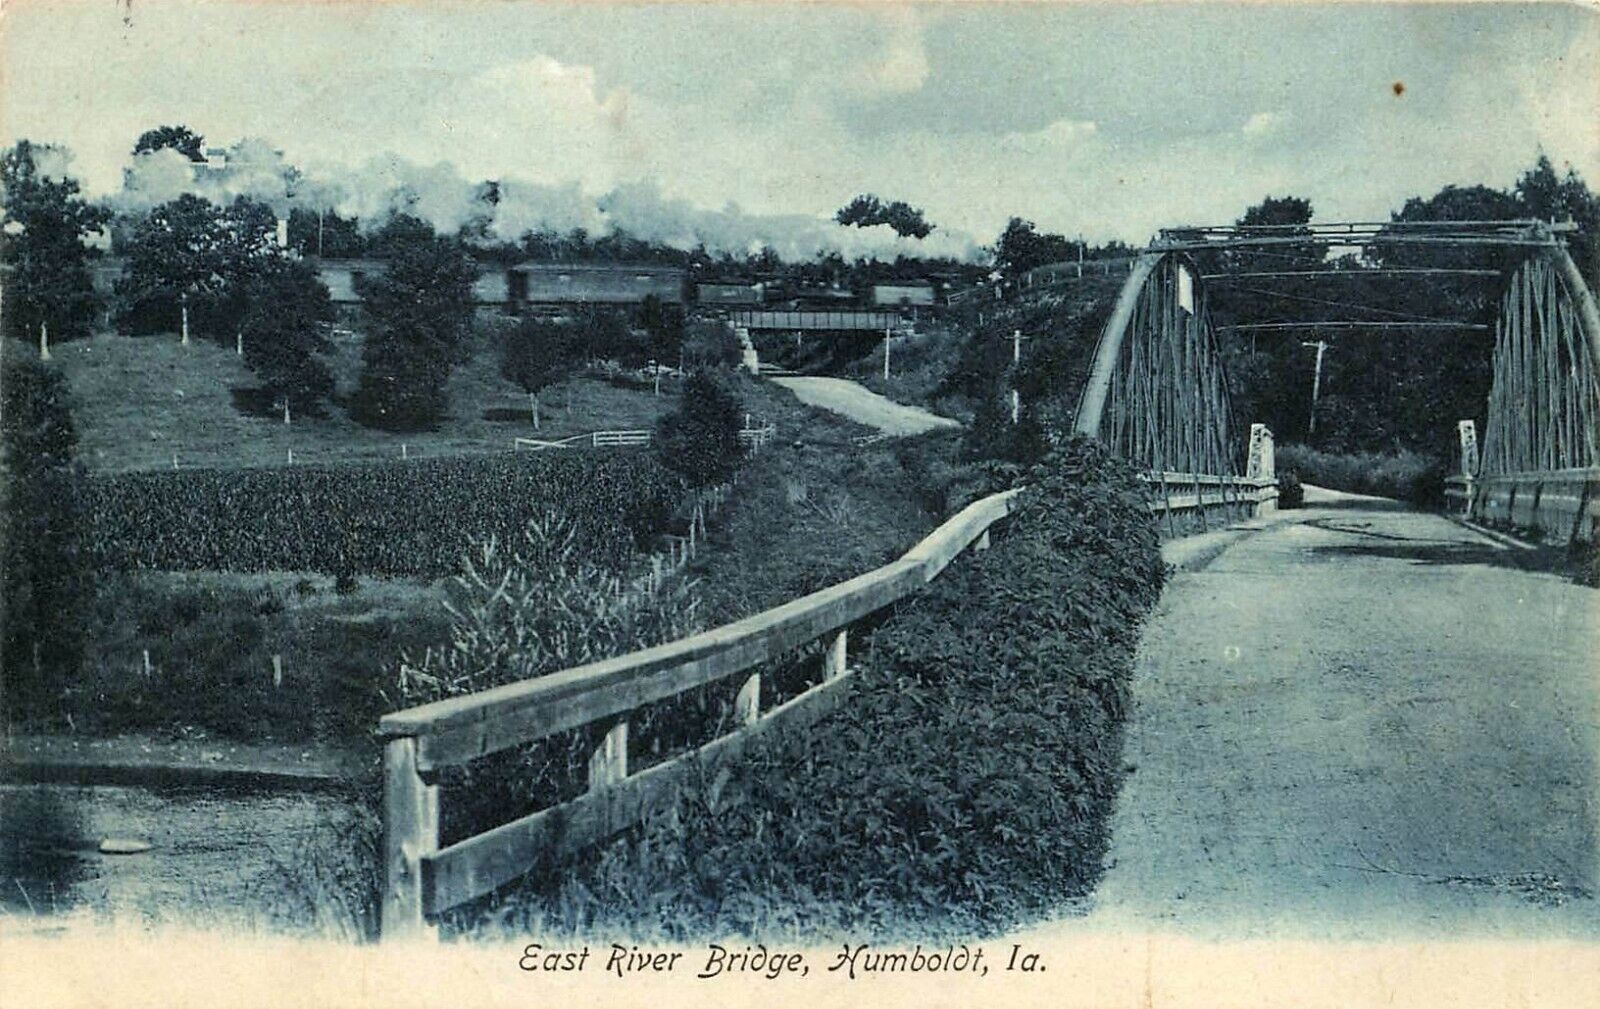 1907 IOWA PHOTO POSTCARD: VIEW OF EAST RIVER BRIDGE, HUMBOLDT, IA UND/B